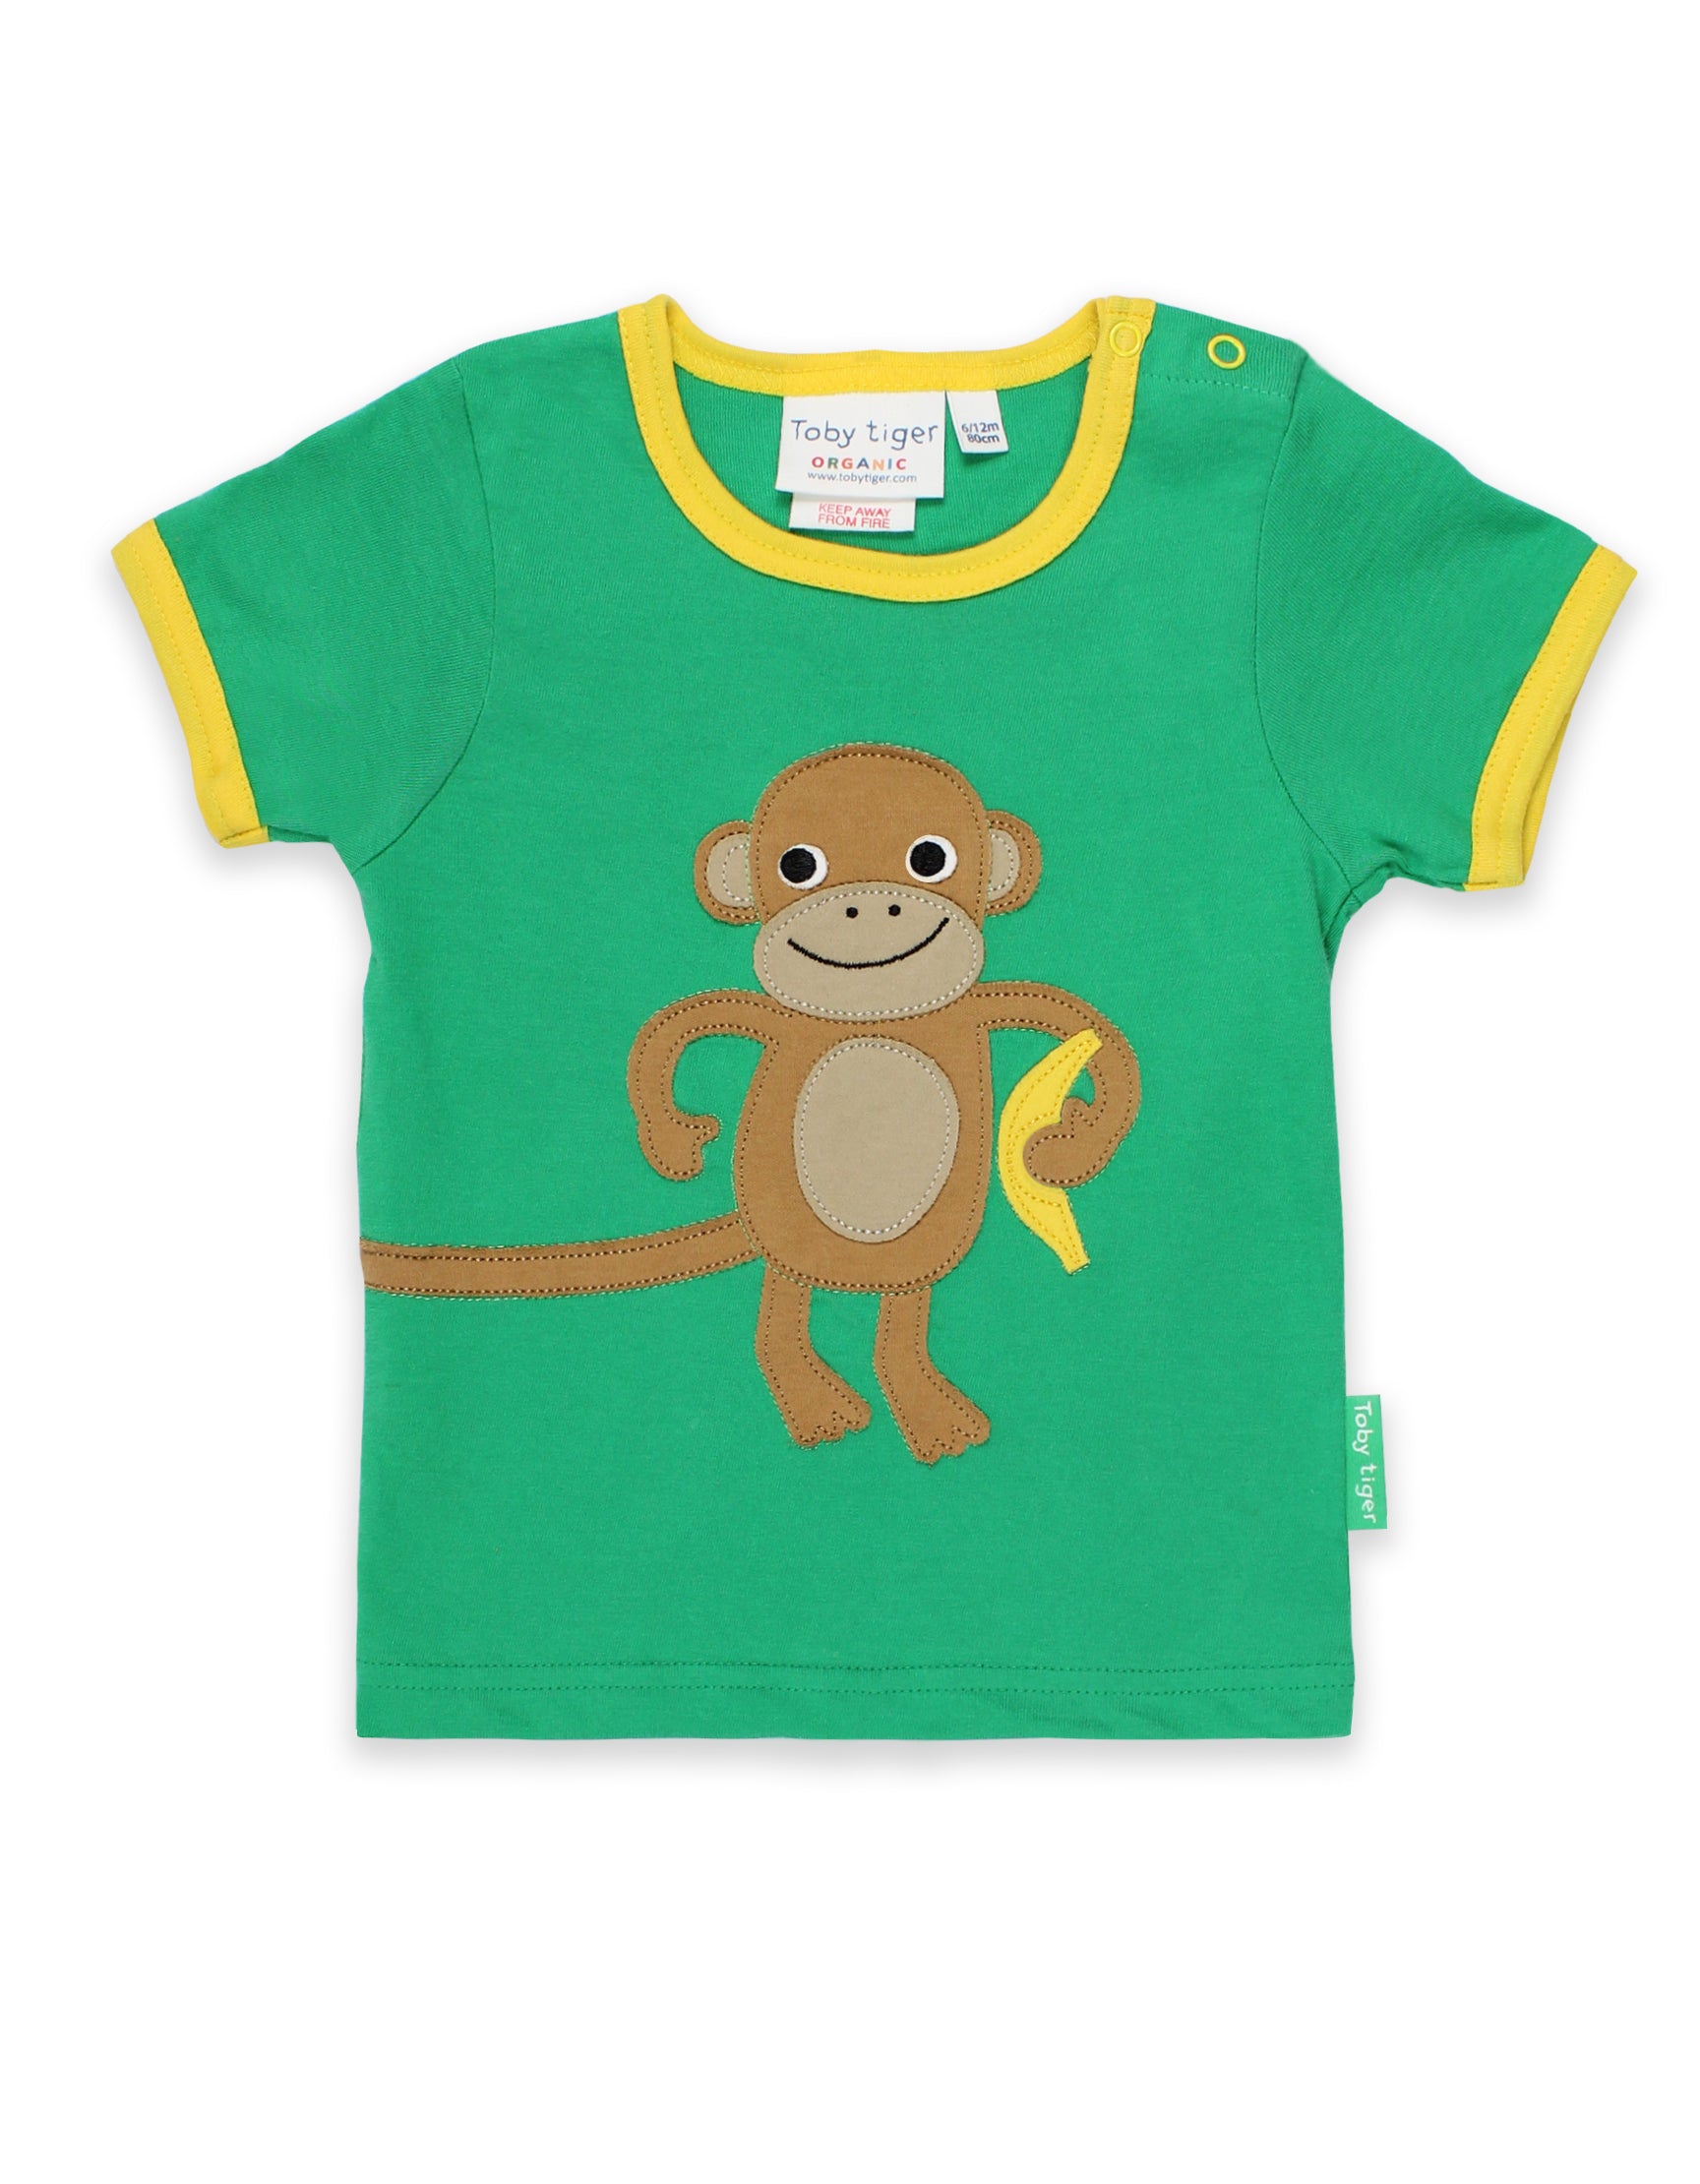 Toby Tiger Organic Short Sleeve T-Shirt - Monkey Applique